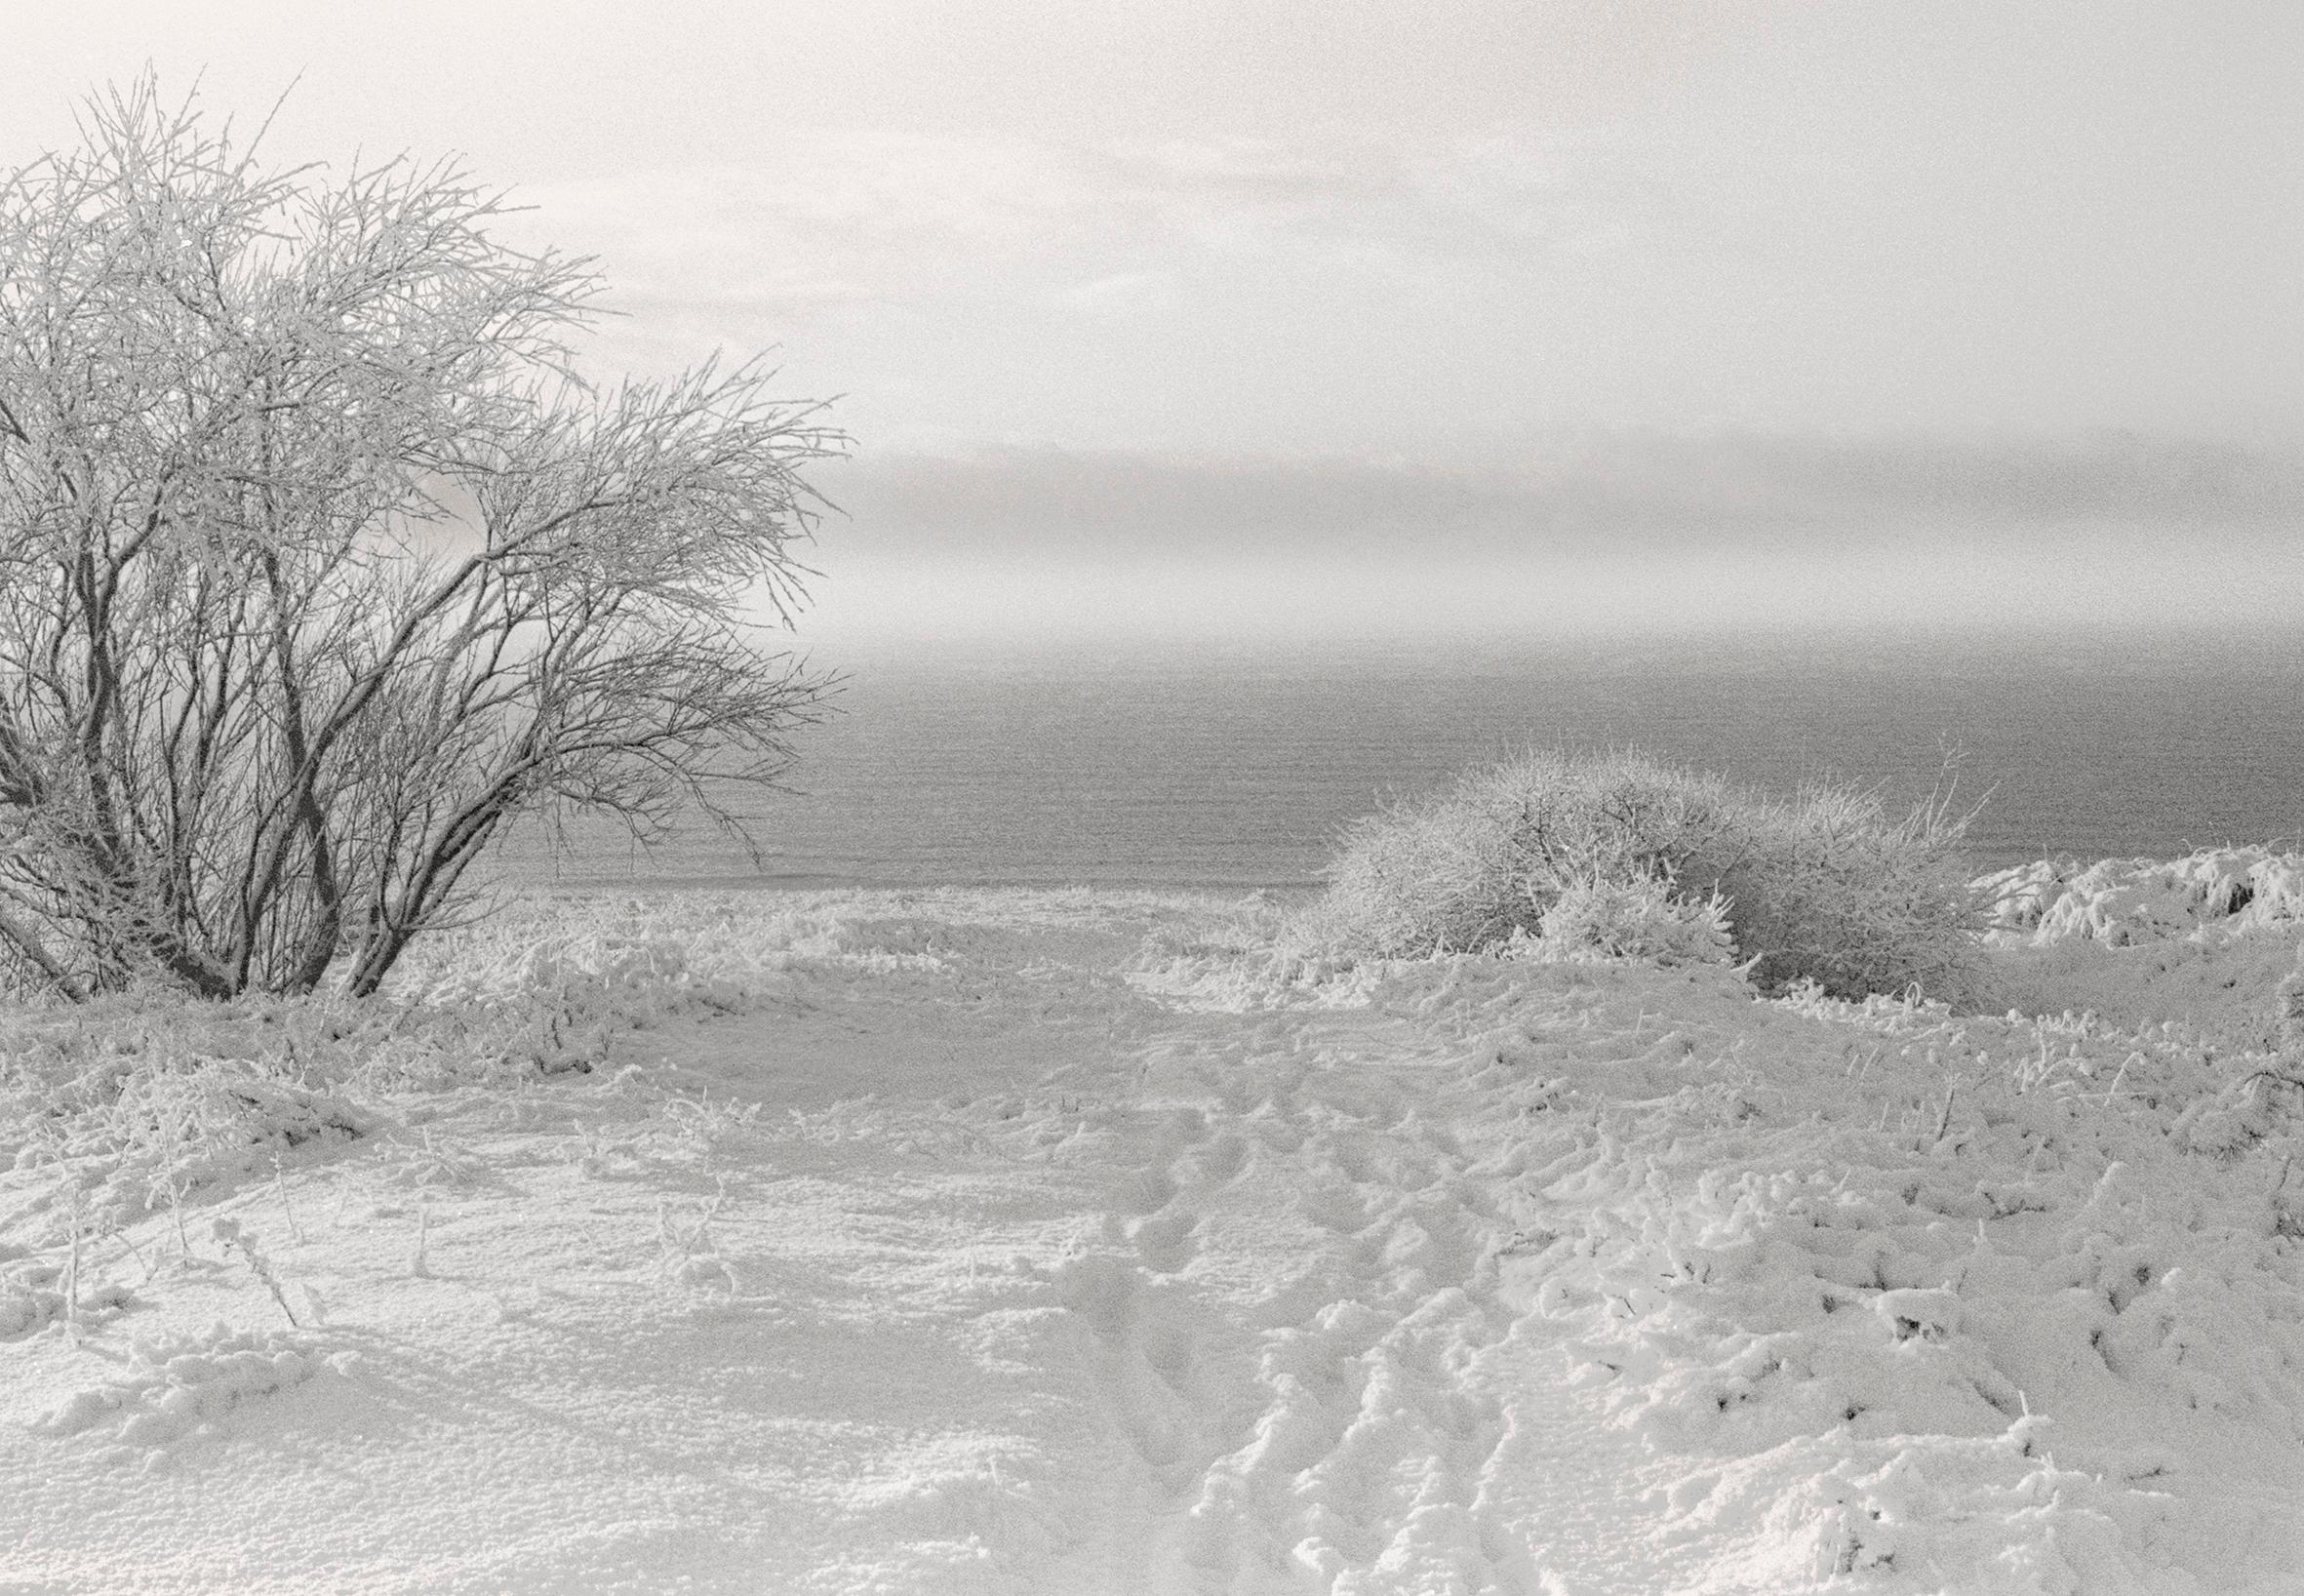 Ugne Pouwell Landscape Photograph - 'Baltic freeze #3' - black and white analogue landscape photography 42 x 29 cm